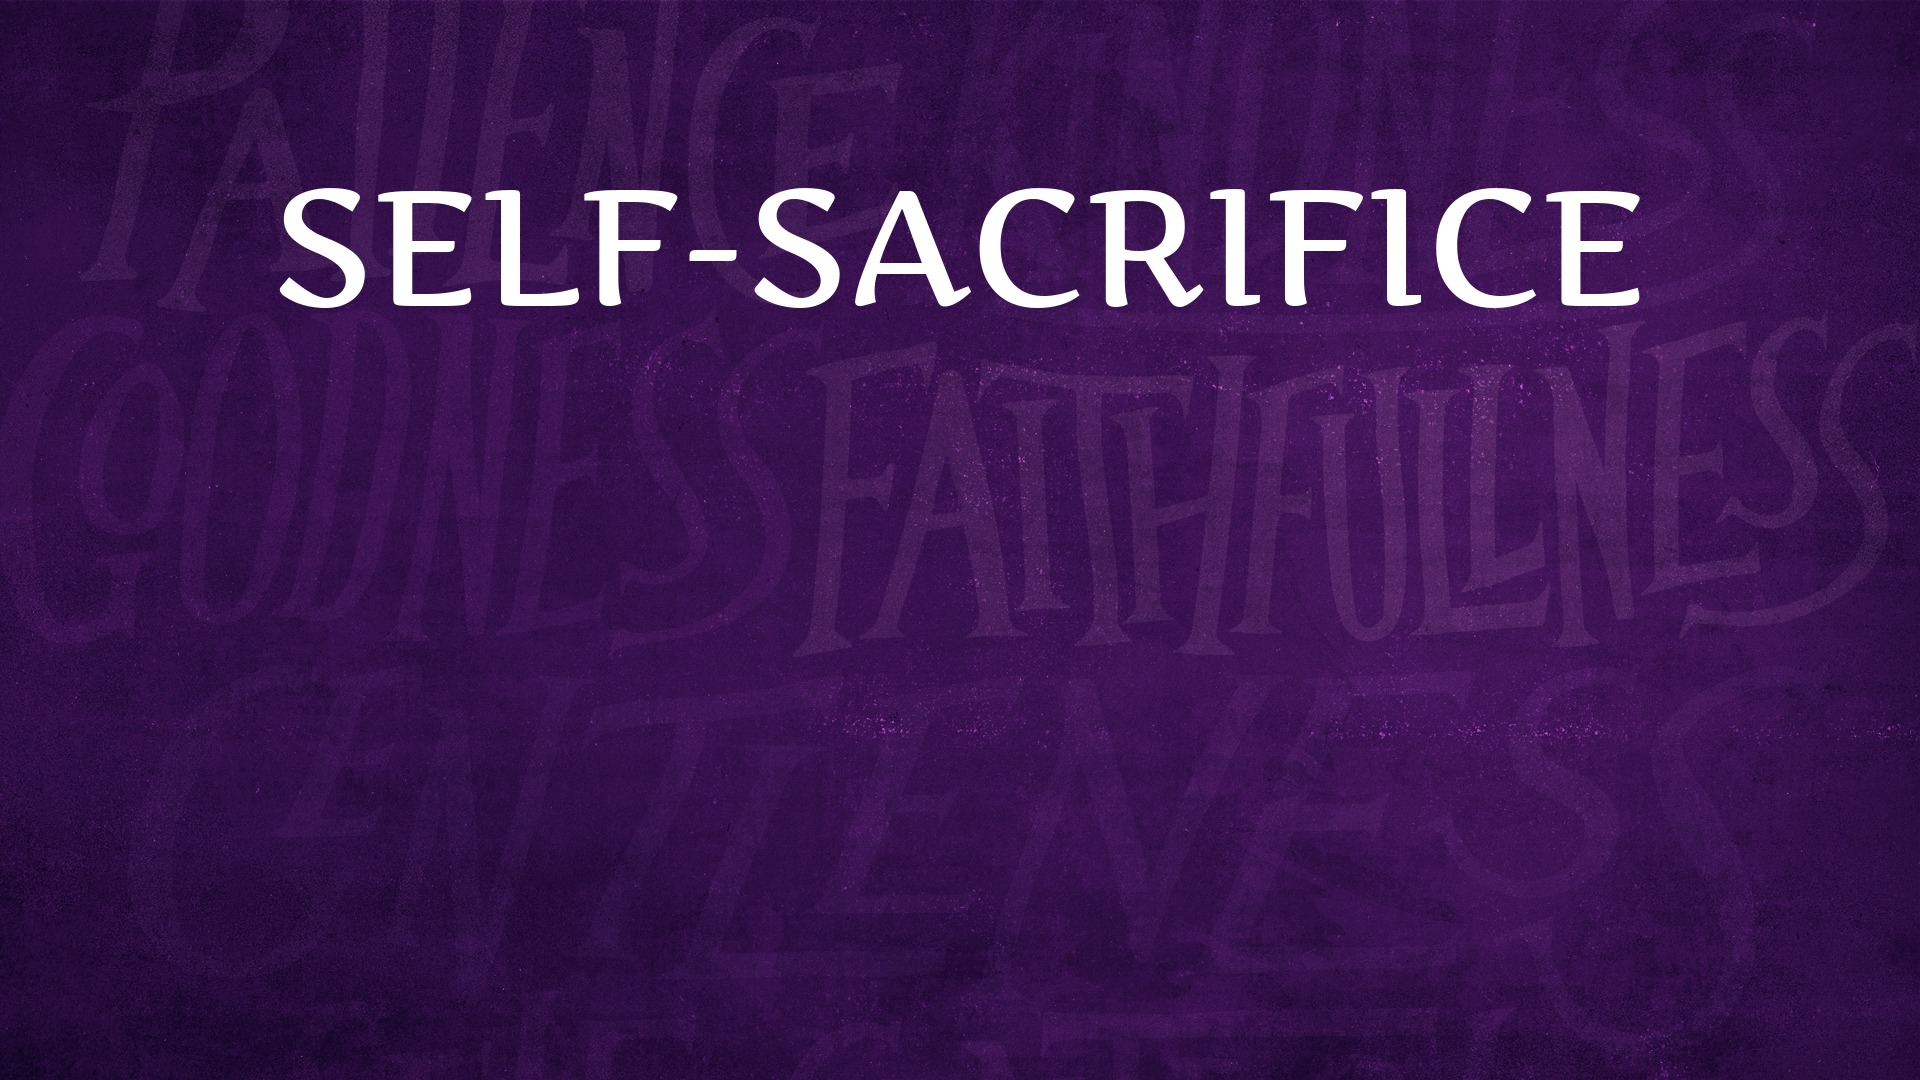 Self-sacrifice